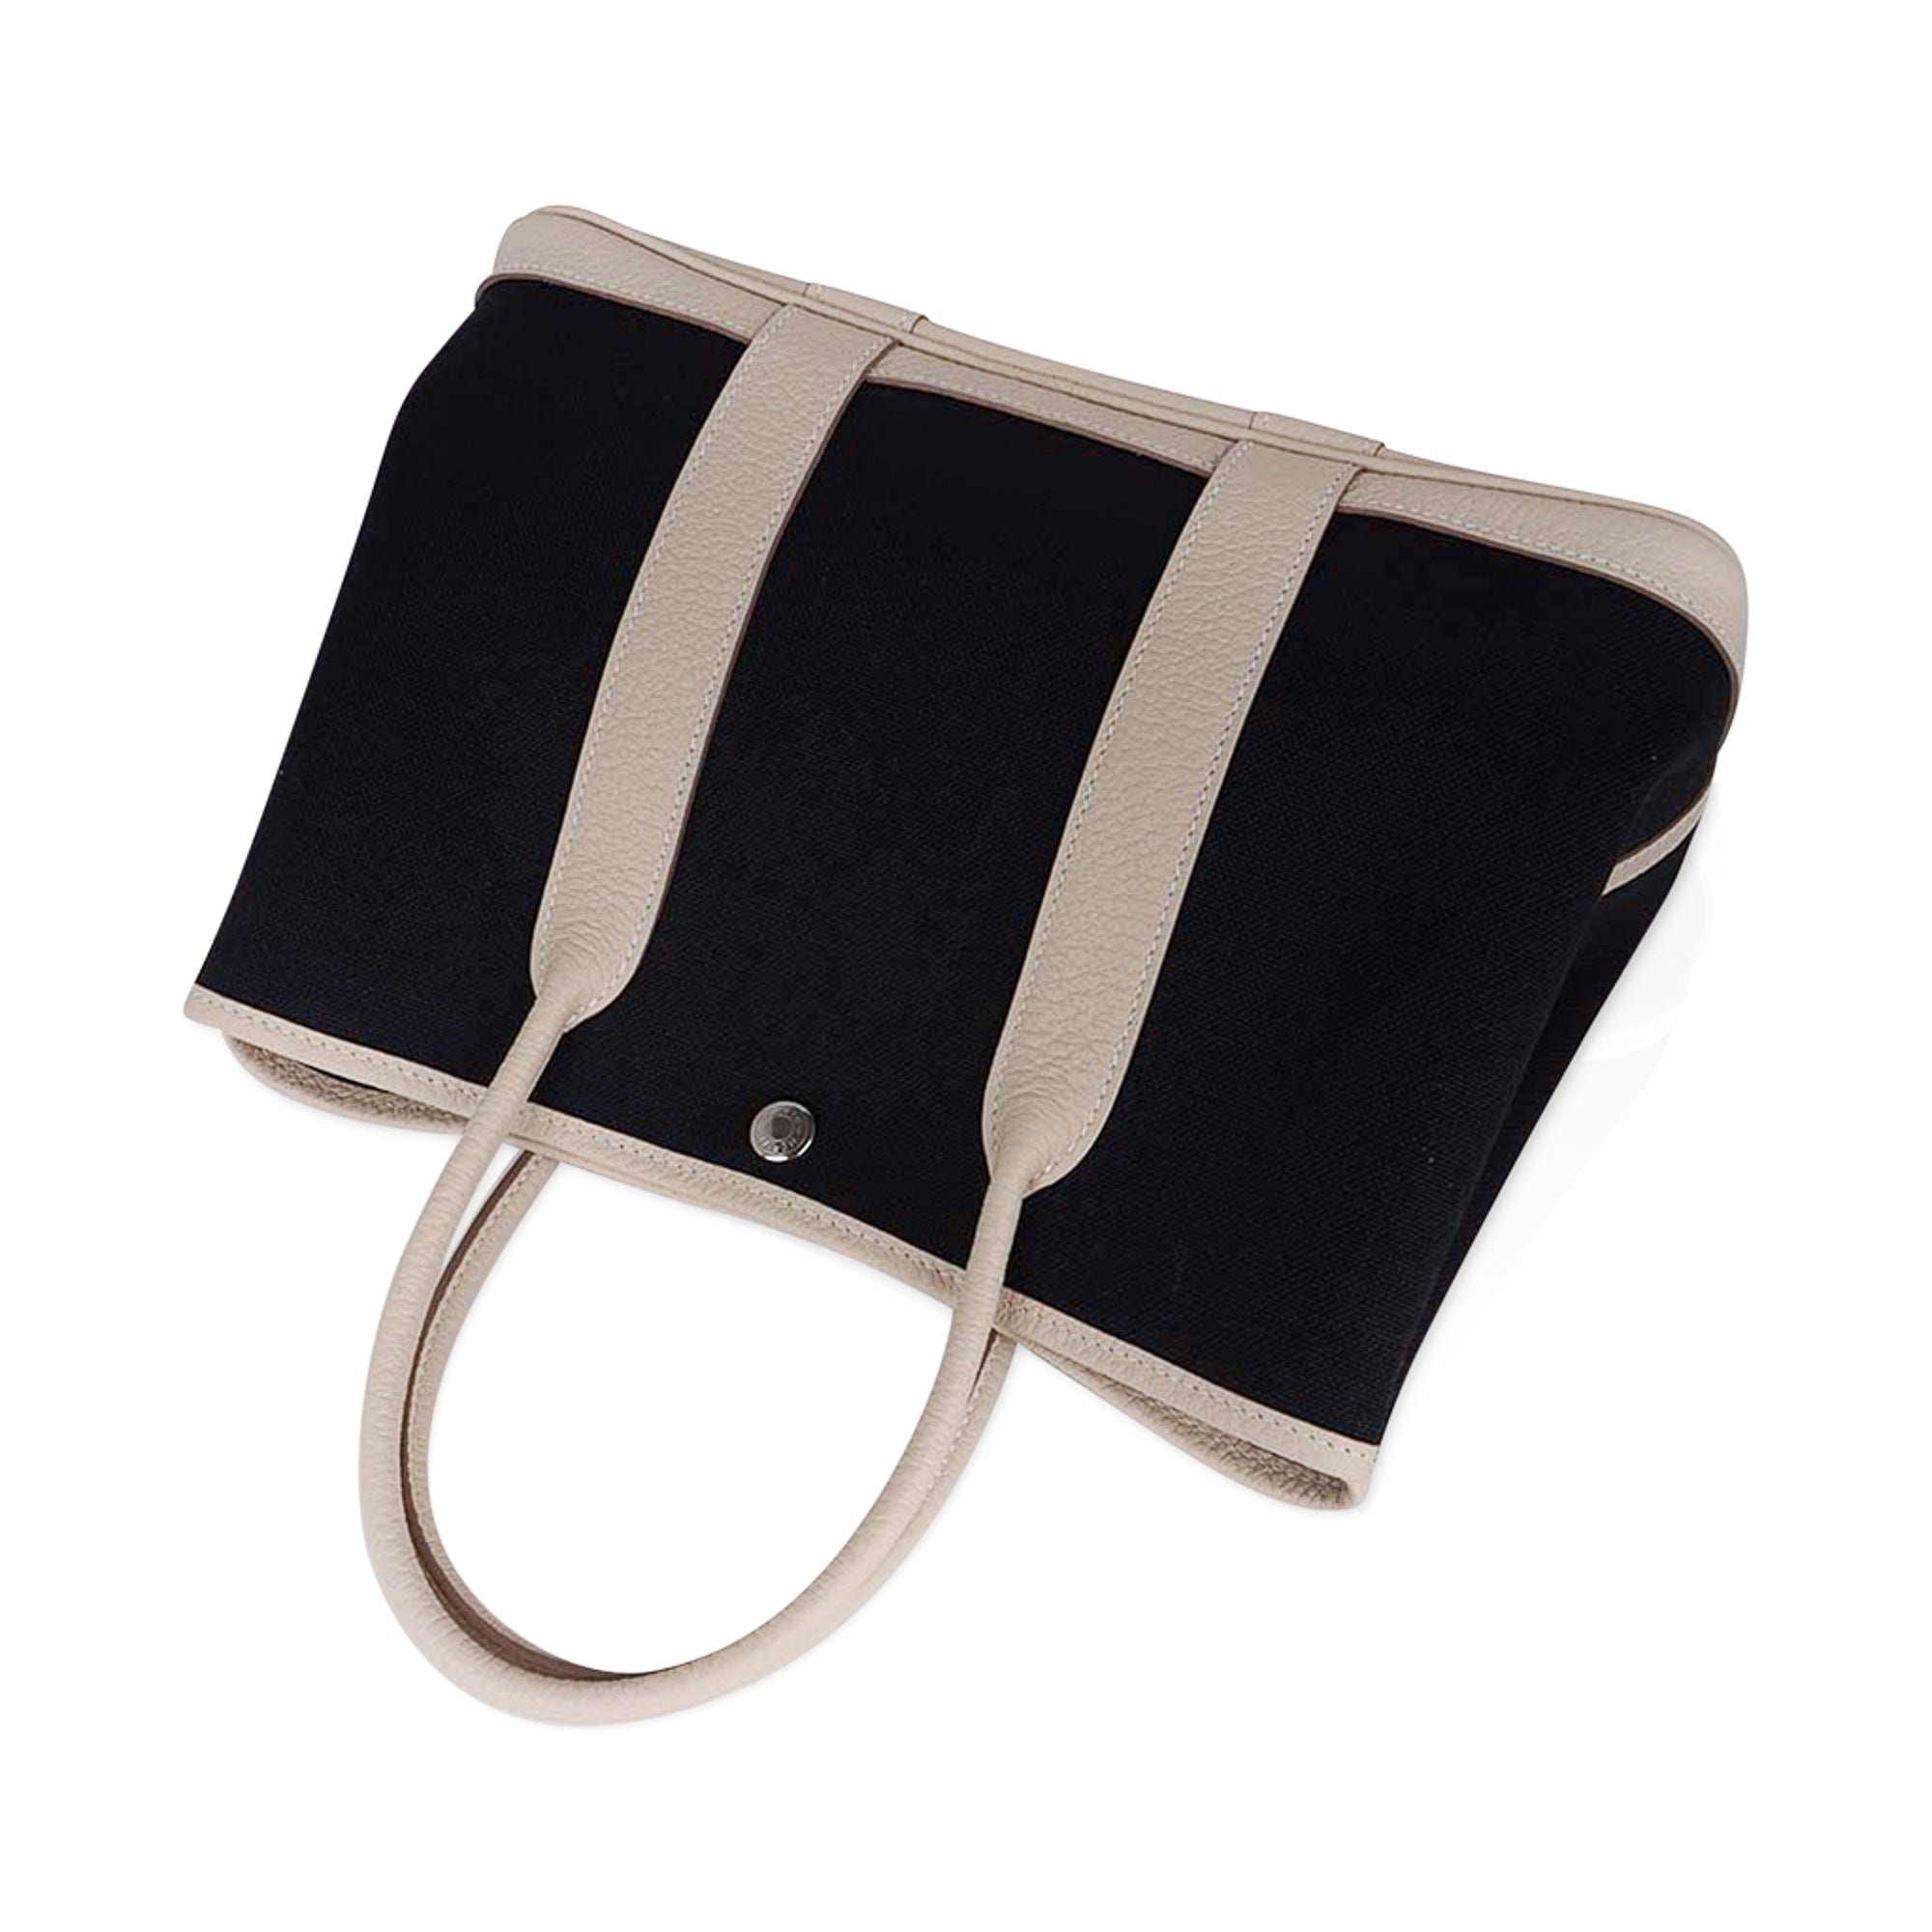 Hermès Garden Party Black Negonda and Toile 30 Palladium Hardware, 2023 (Like New), Womens Handbag